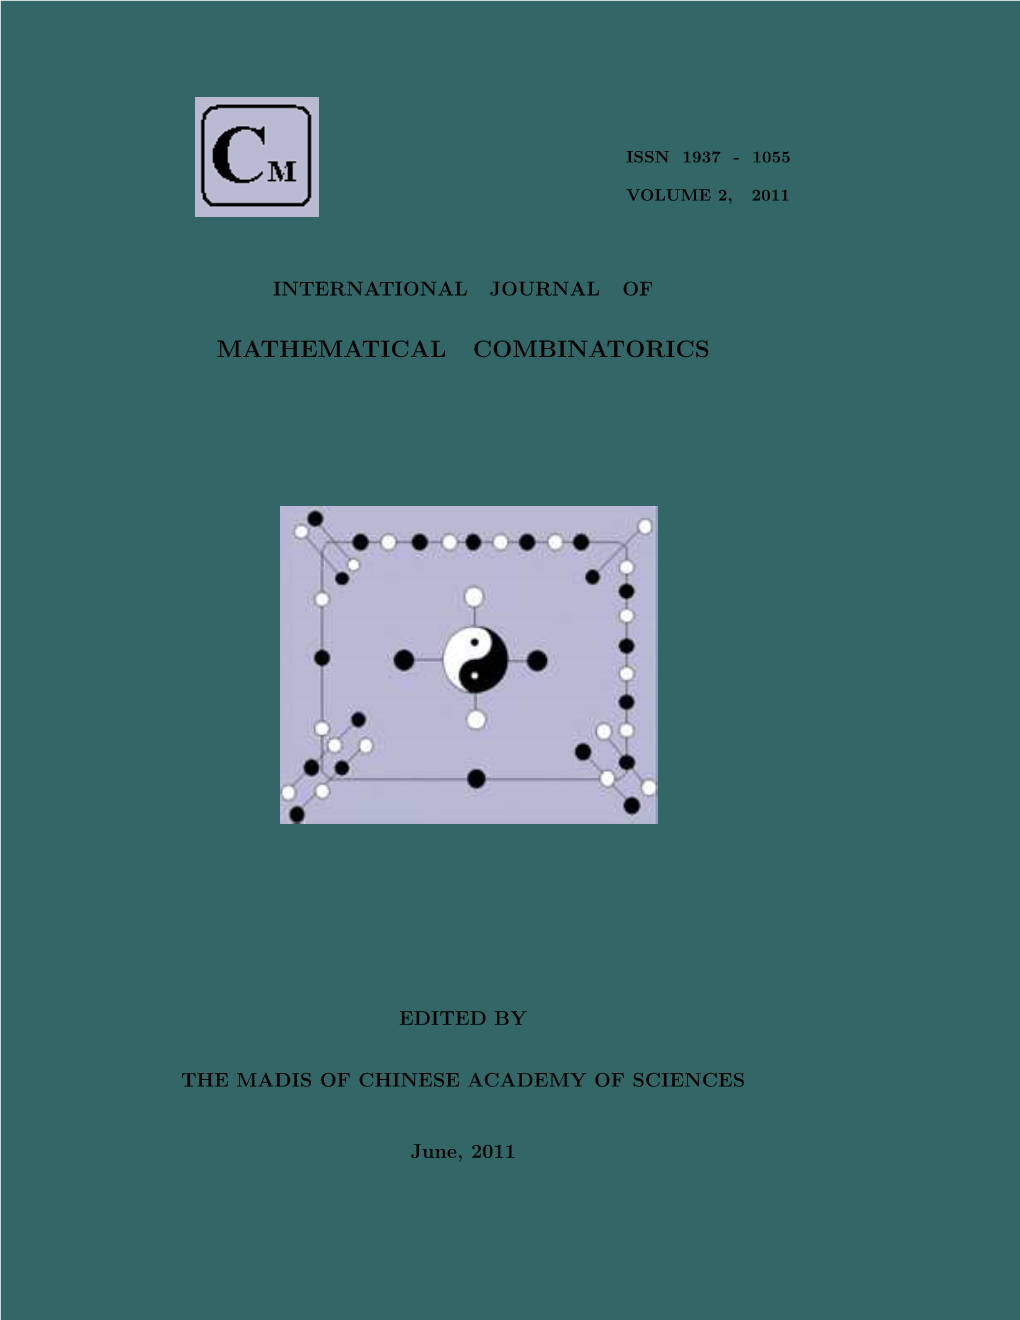 International Journal of Mathematical Combinatorics, Vol. 2, 2011